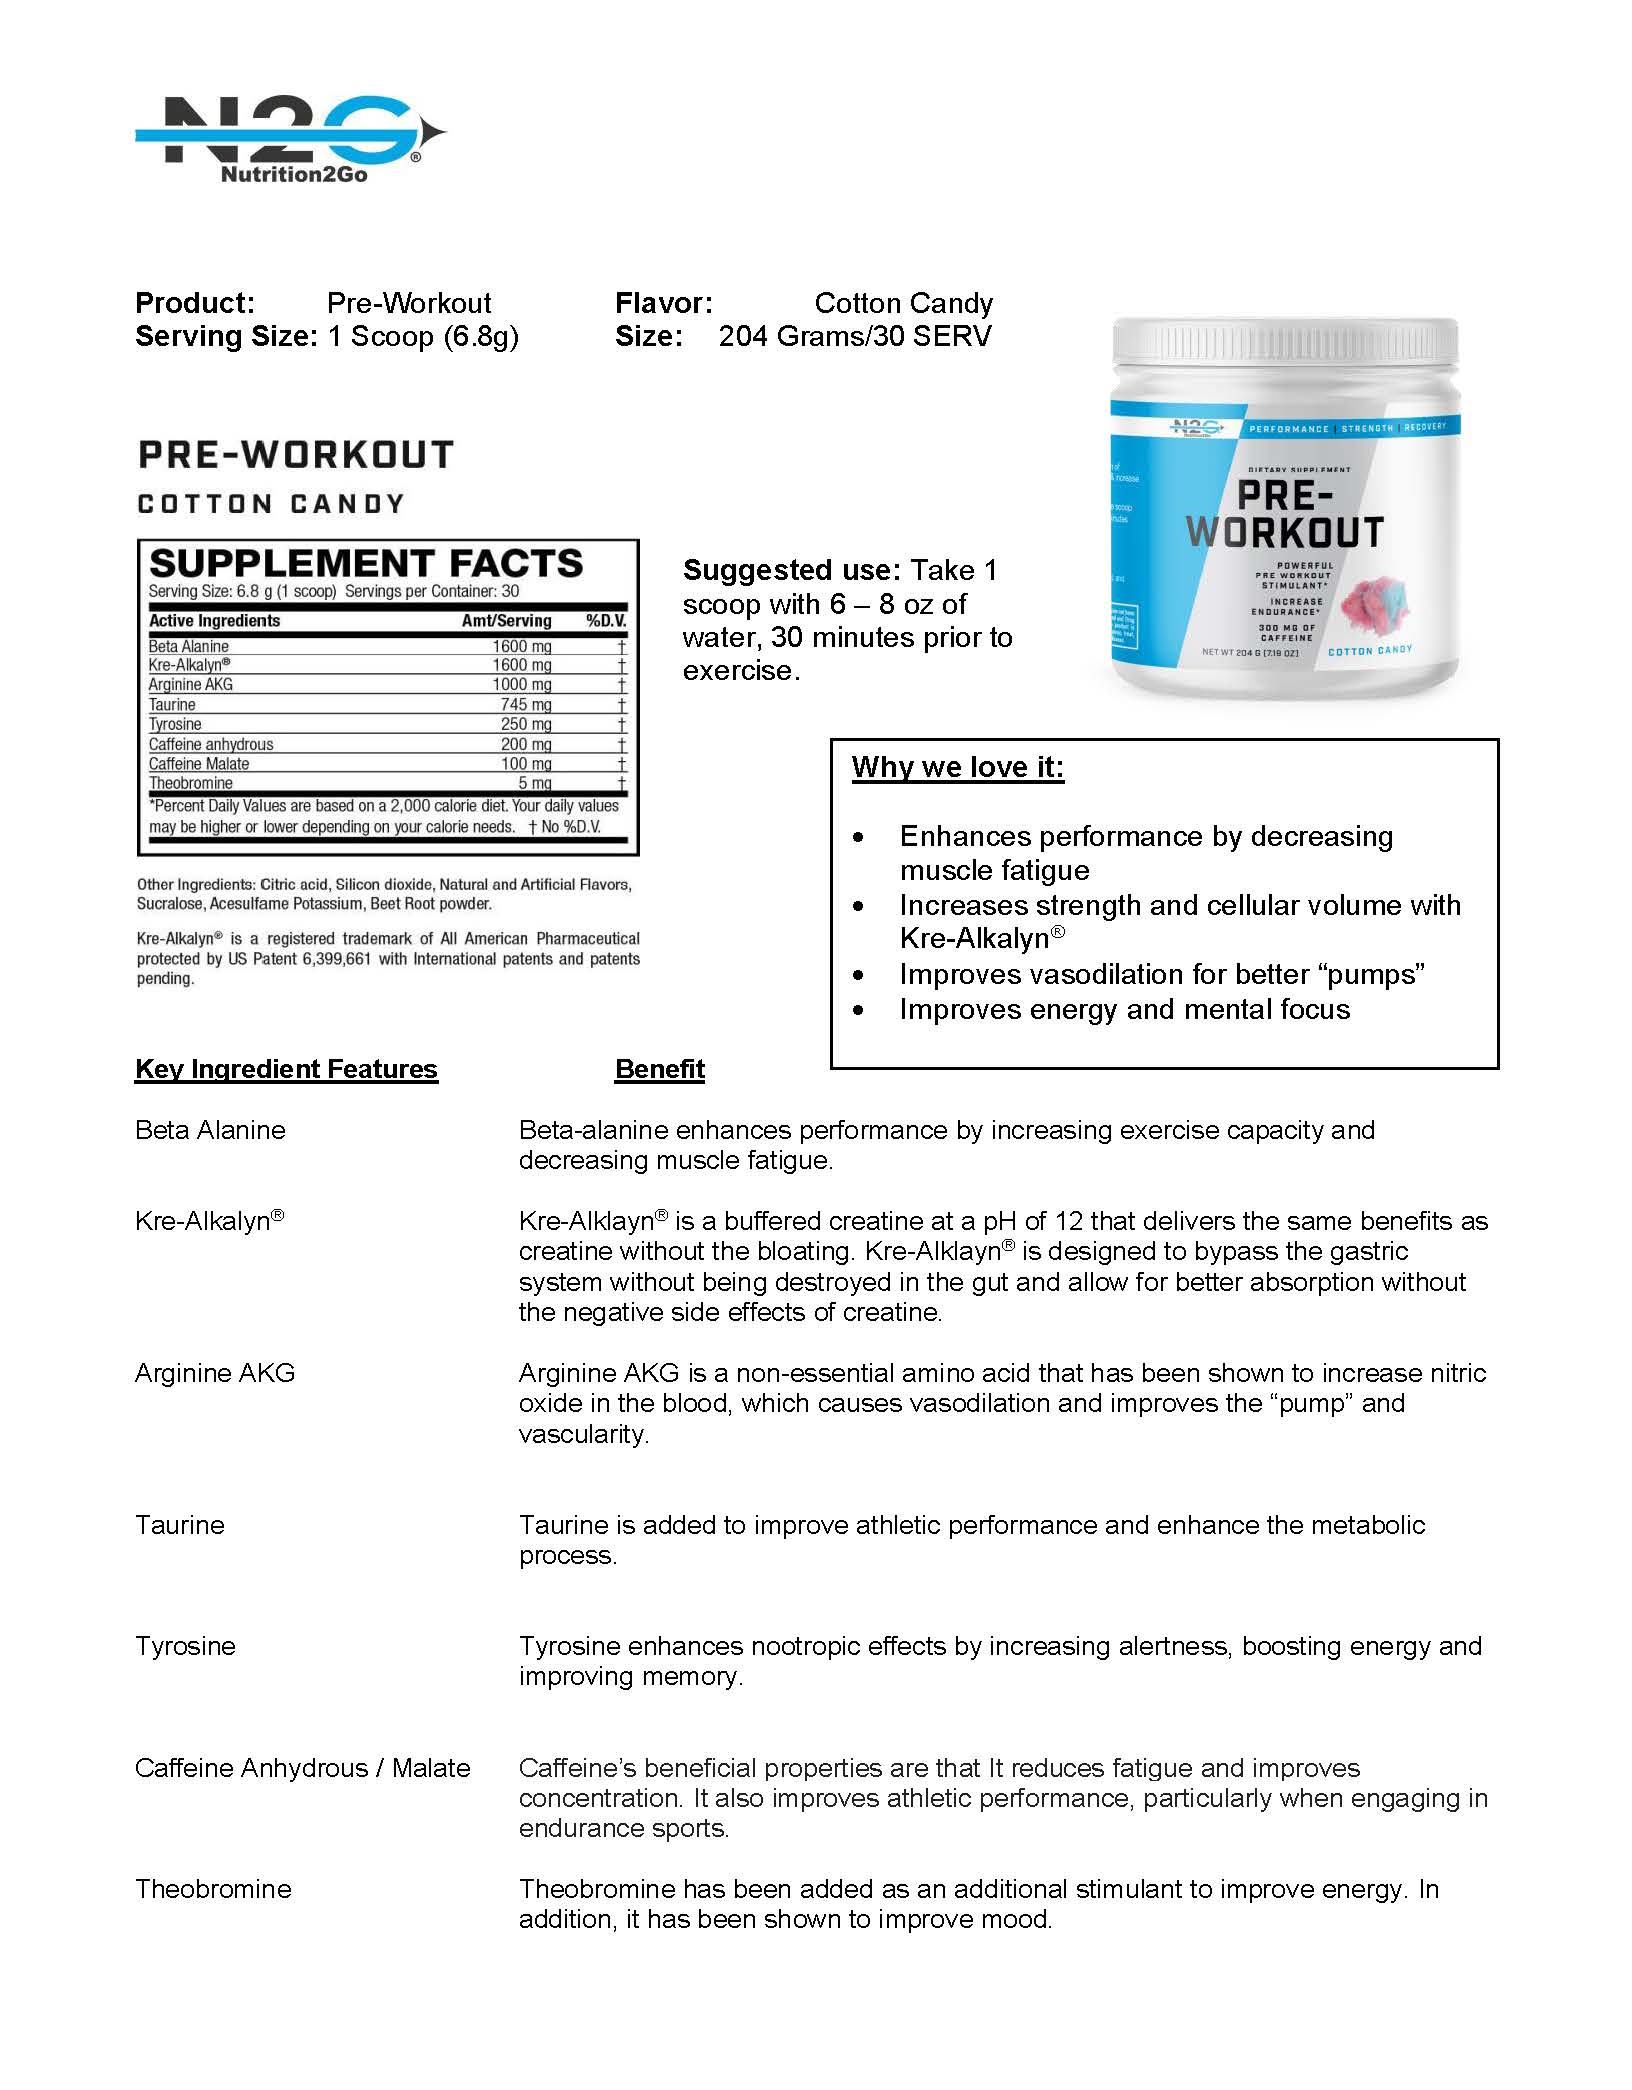 N2G Cotton Candy Pre-Workout Fact Sheet